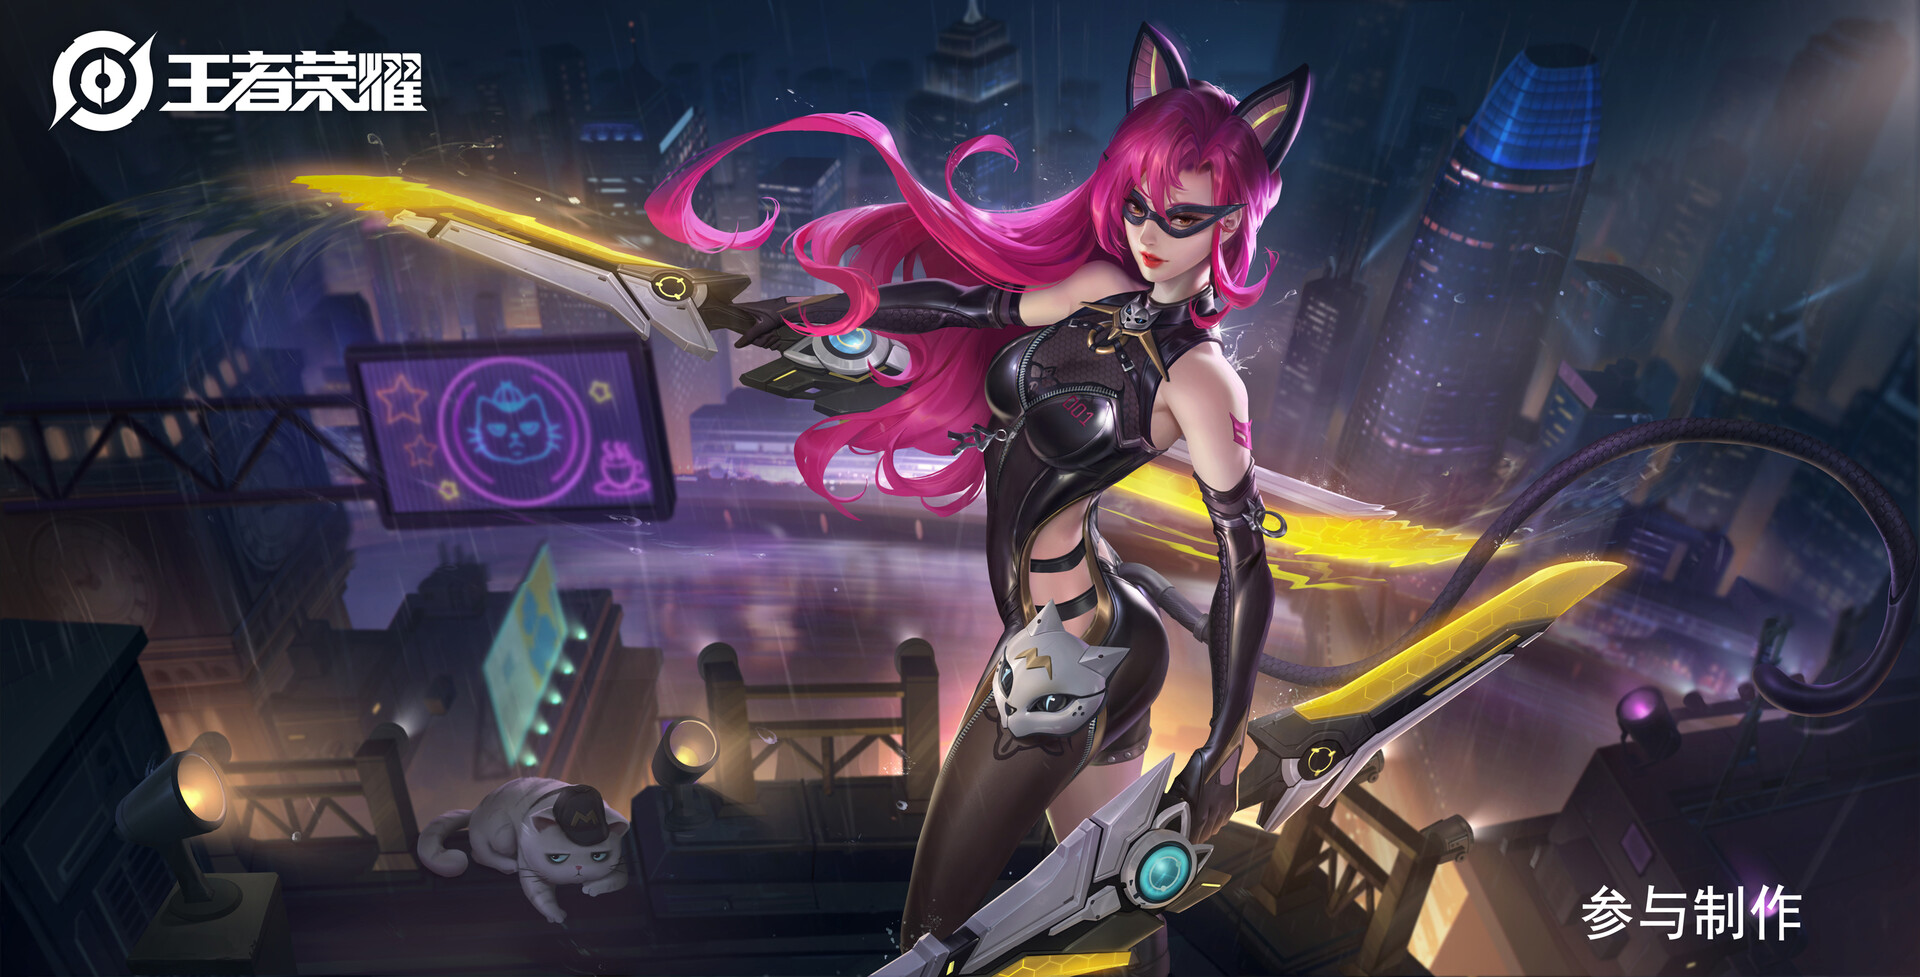 Tang 22 Drawing Women Pink Hair Cat Girl Black Clothing Mask Weapon Cyberpunk Rooftops Rain Video Ga 1920x977